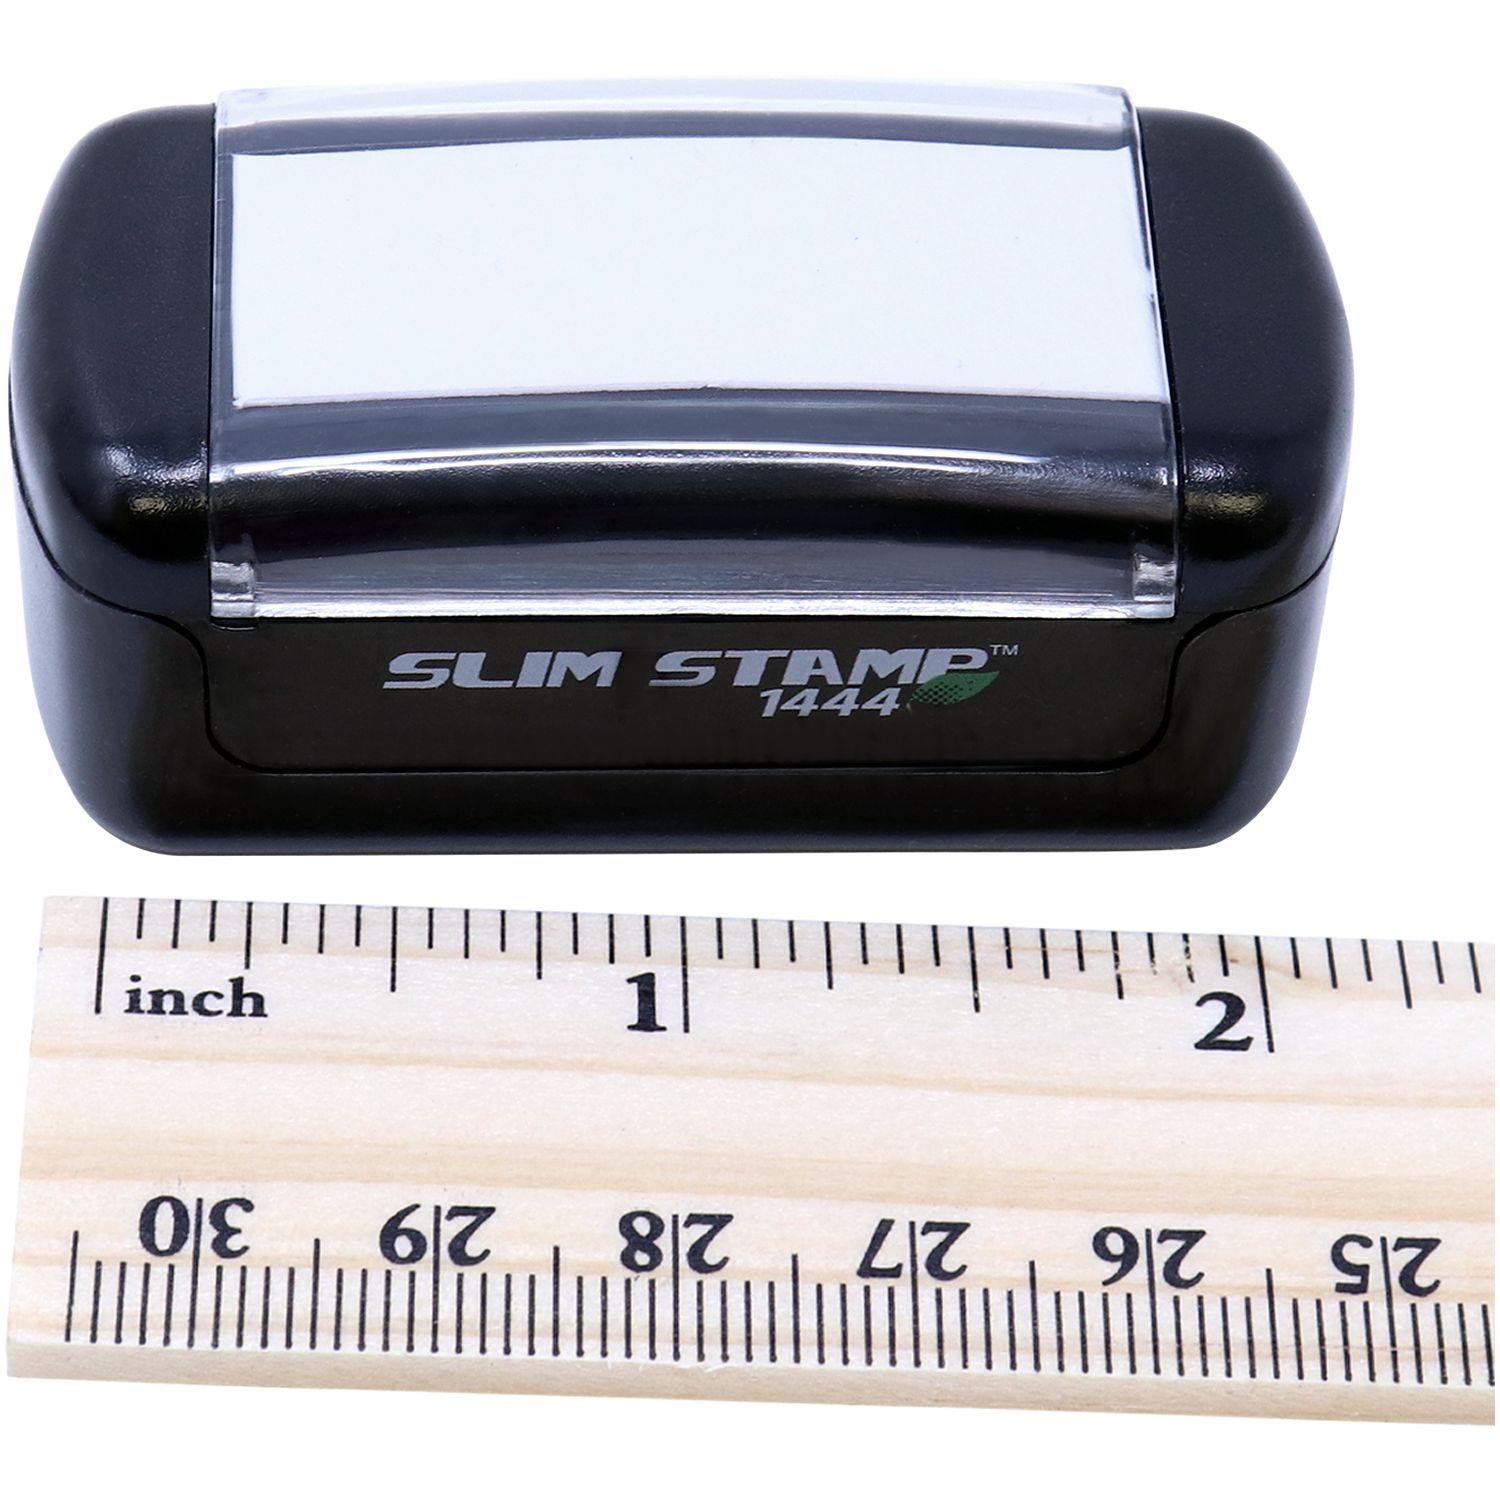 Measurement Slim Pre-Inked Terrific Effort Stamp with Ruler